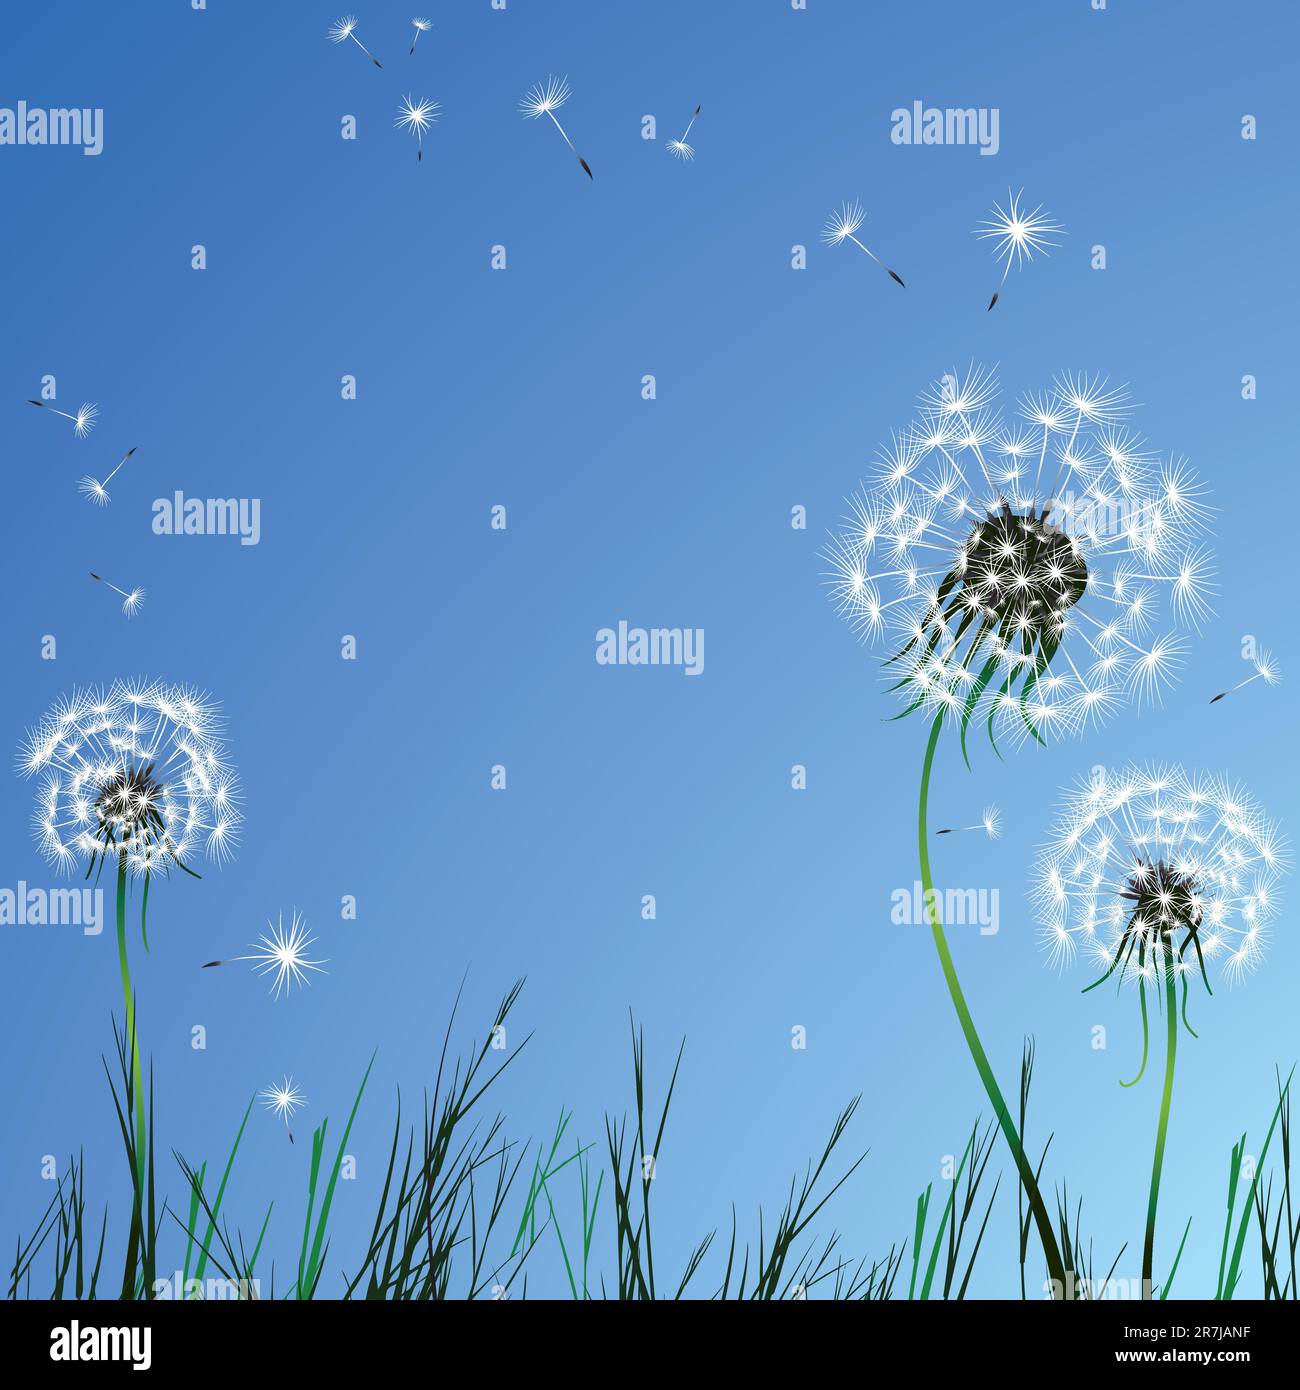 Realistic dandelion grass blue sky. Vector illustration. Stock Vector